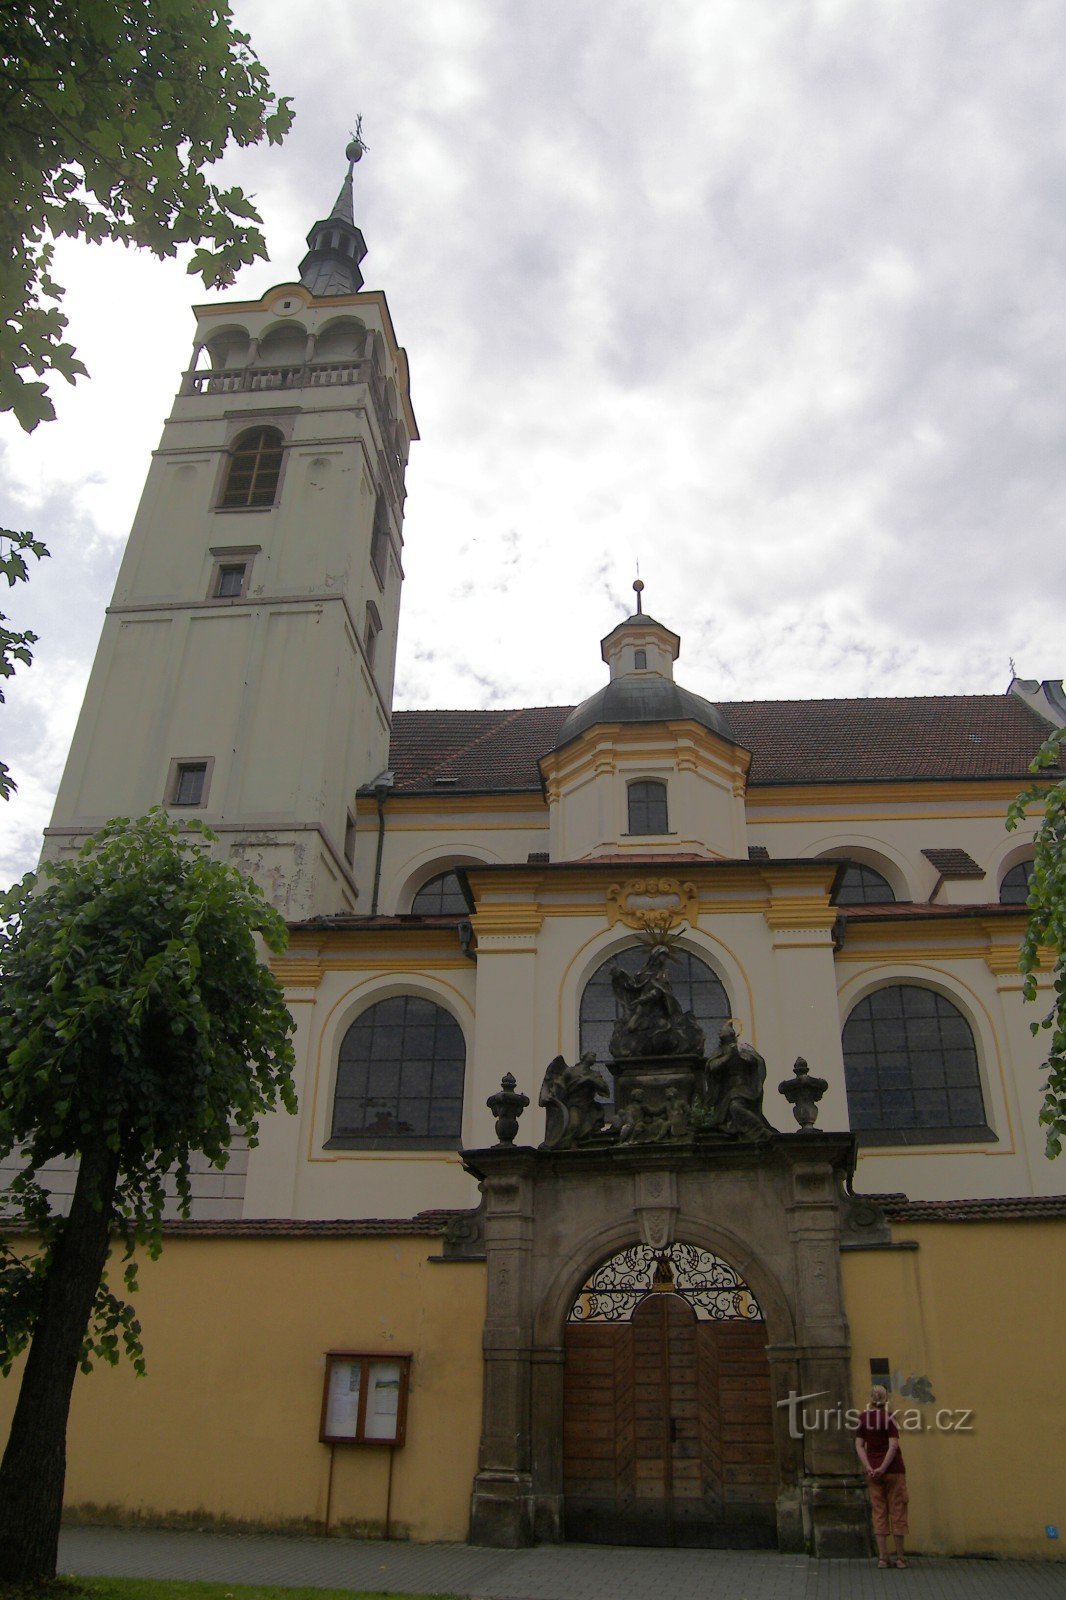 Lipník nad Bečvou - Szent István-templom. František Serafínský